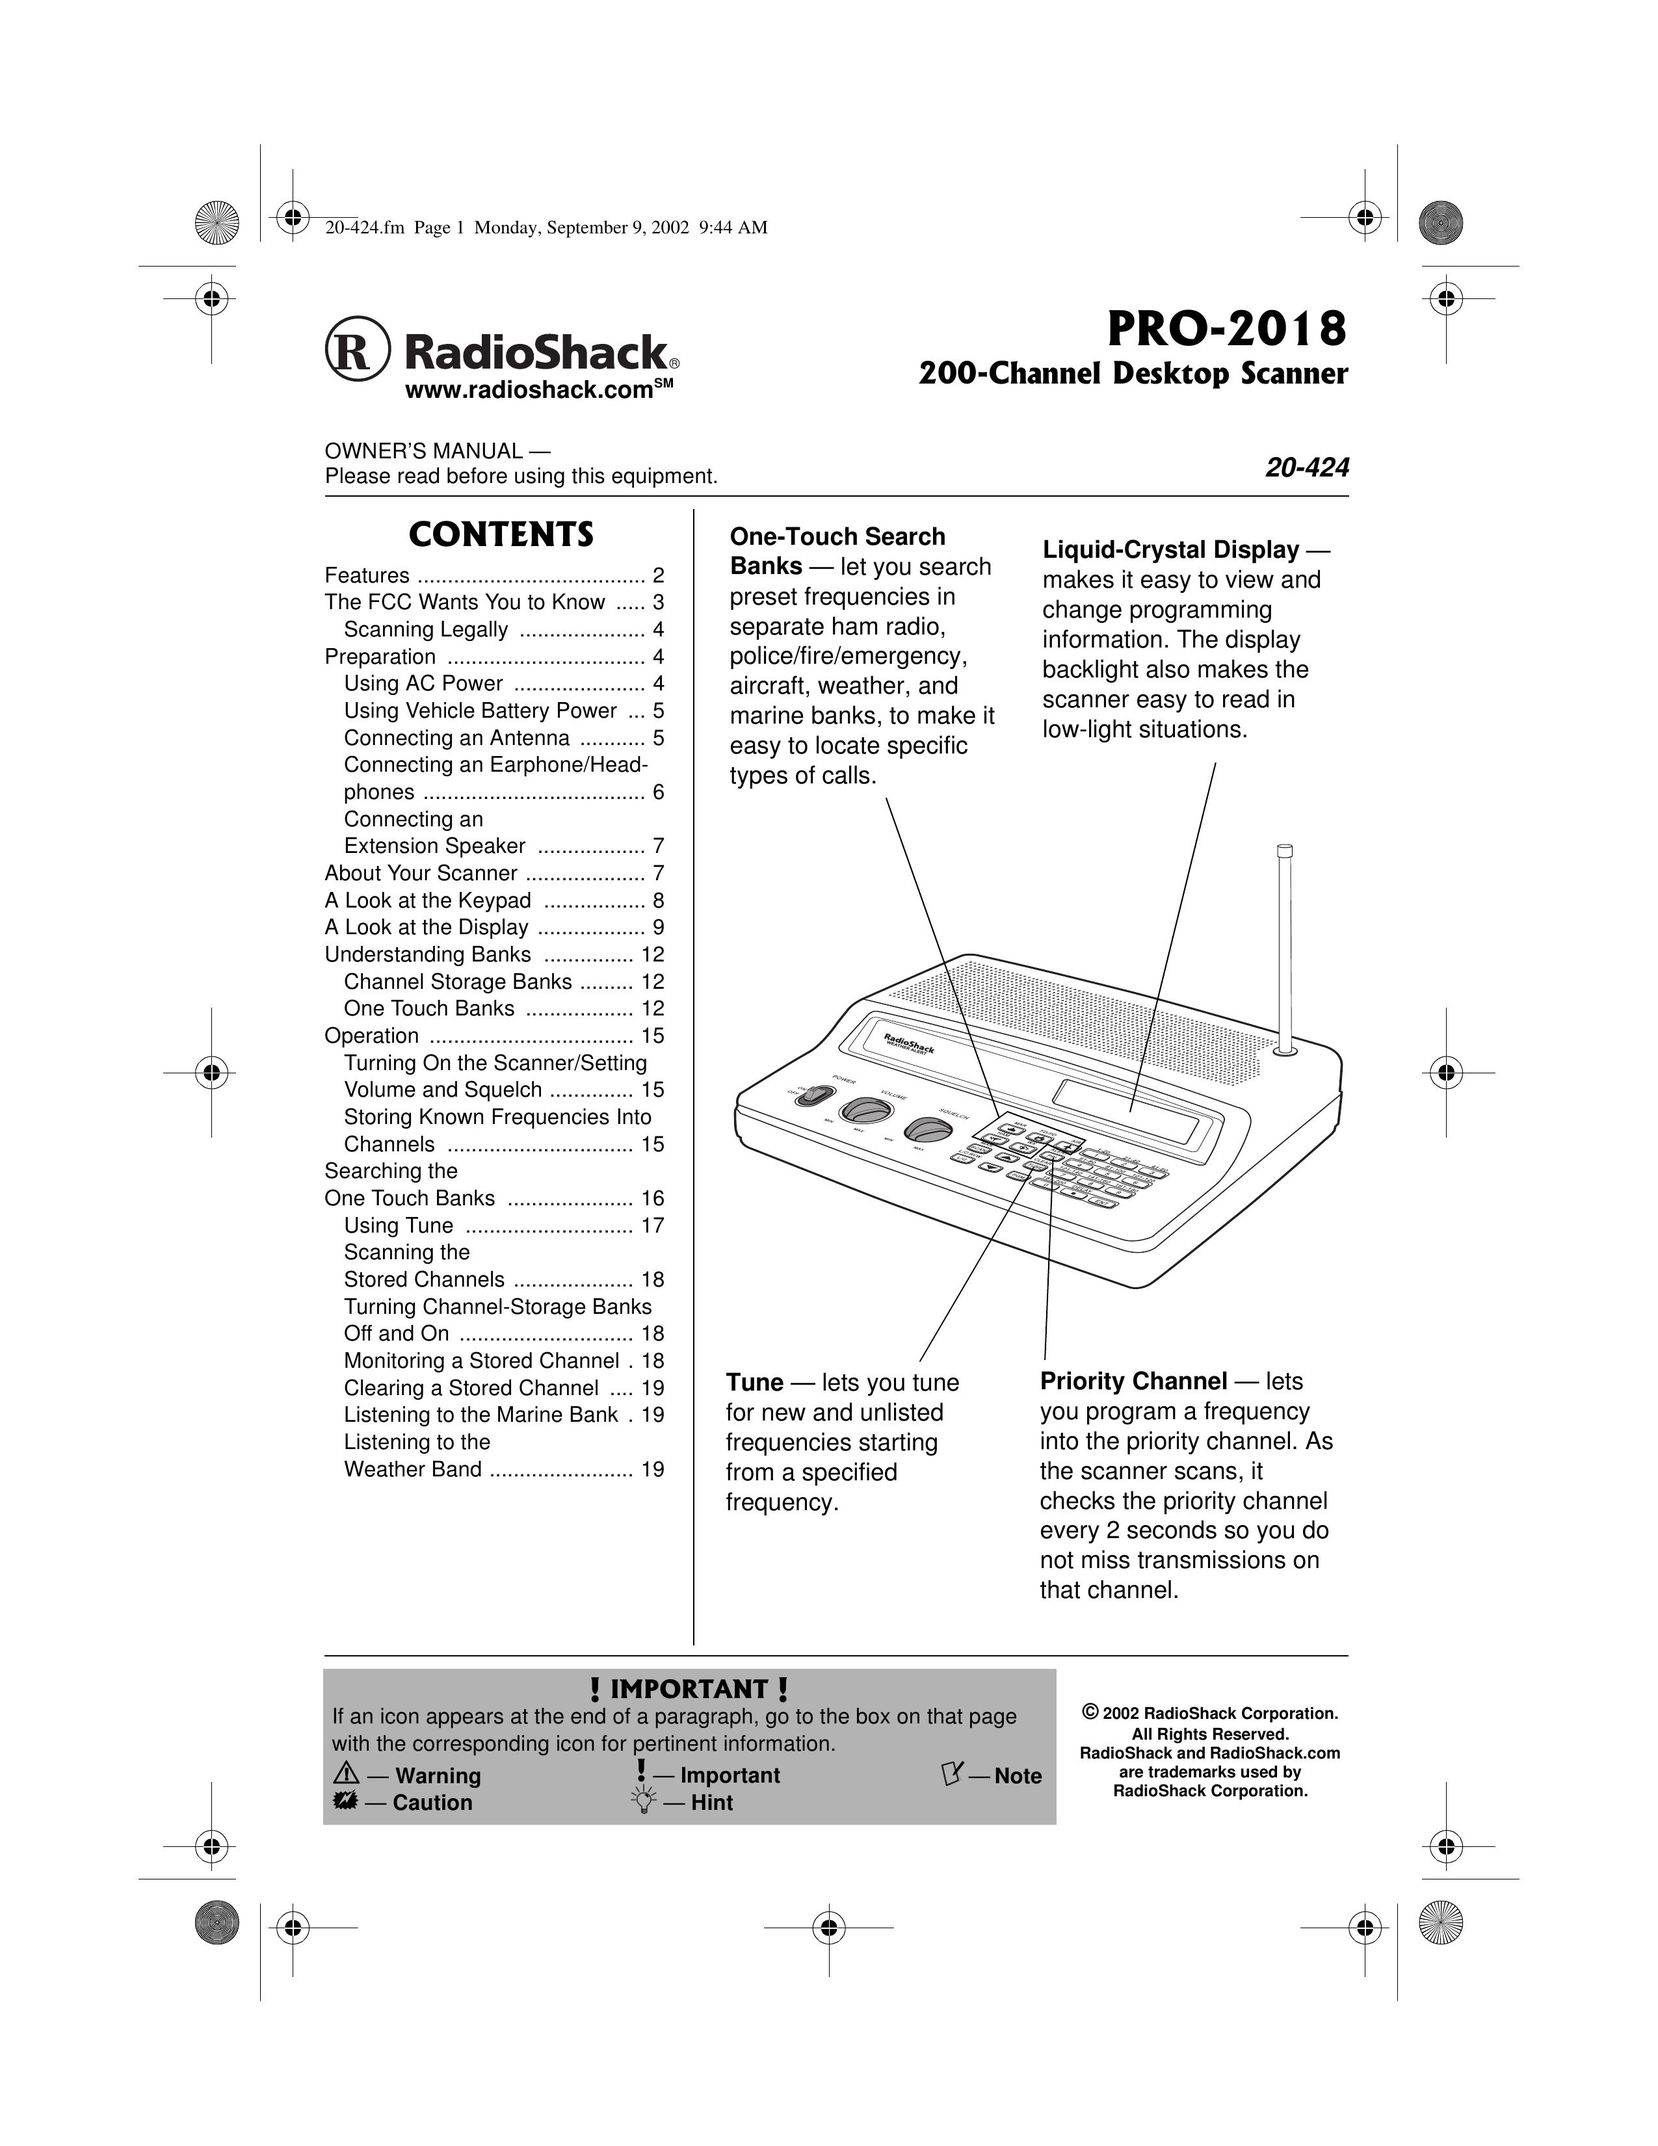 Radio Shack PRO-2018 Range User Manual